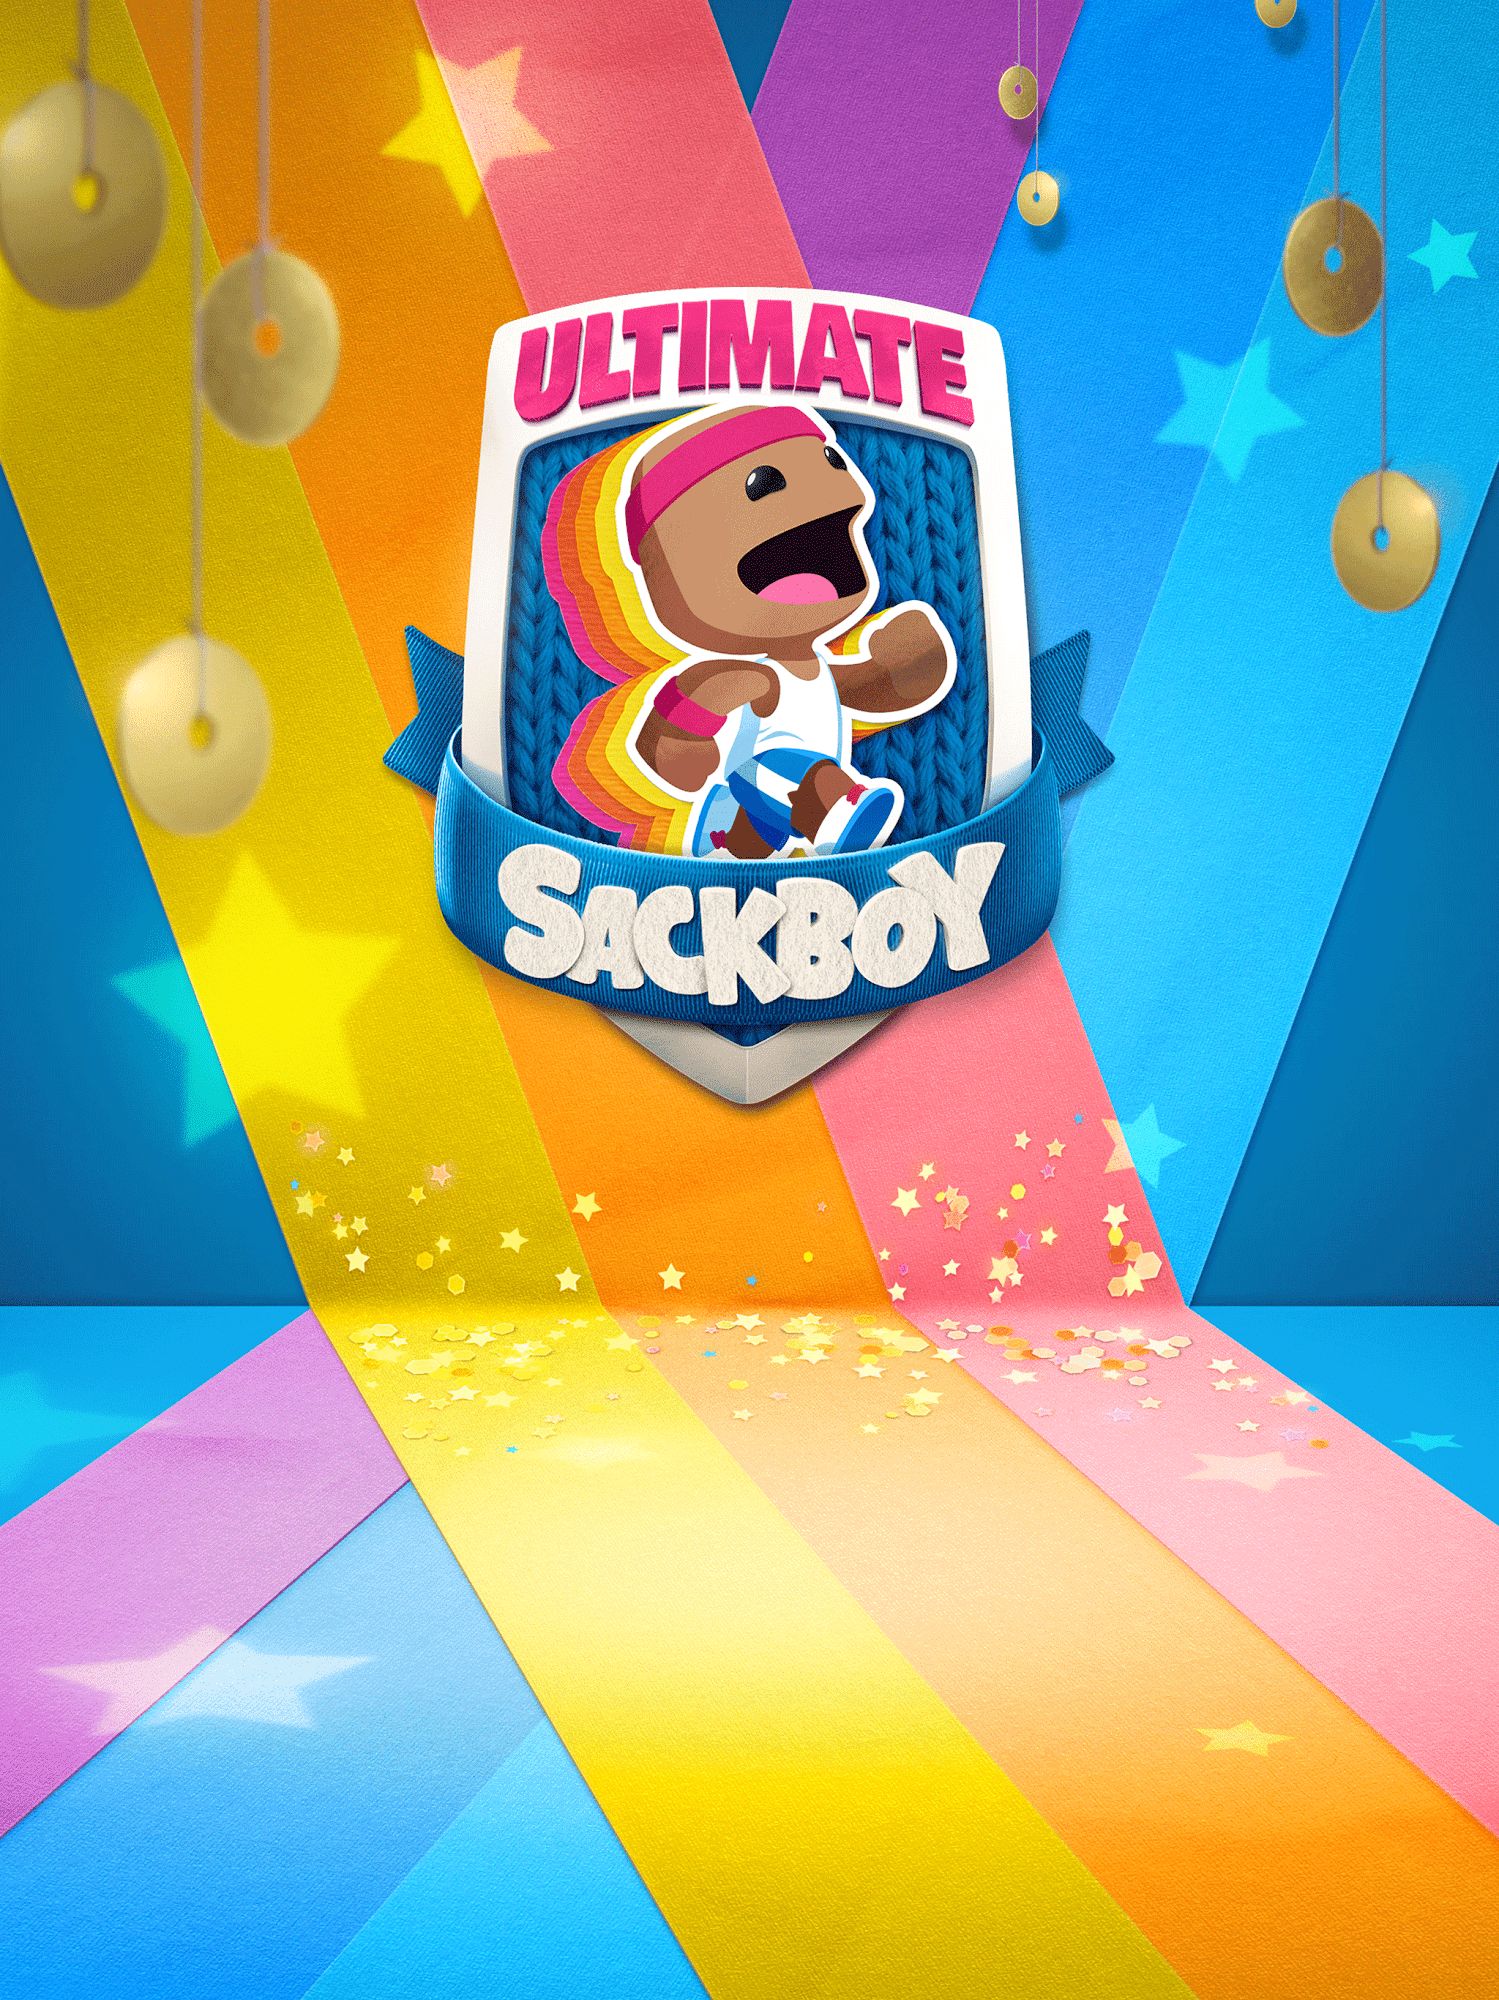 Scarica Ultimate Sackboy gratis per Android.